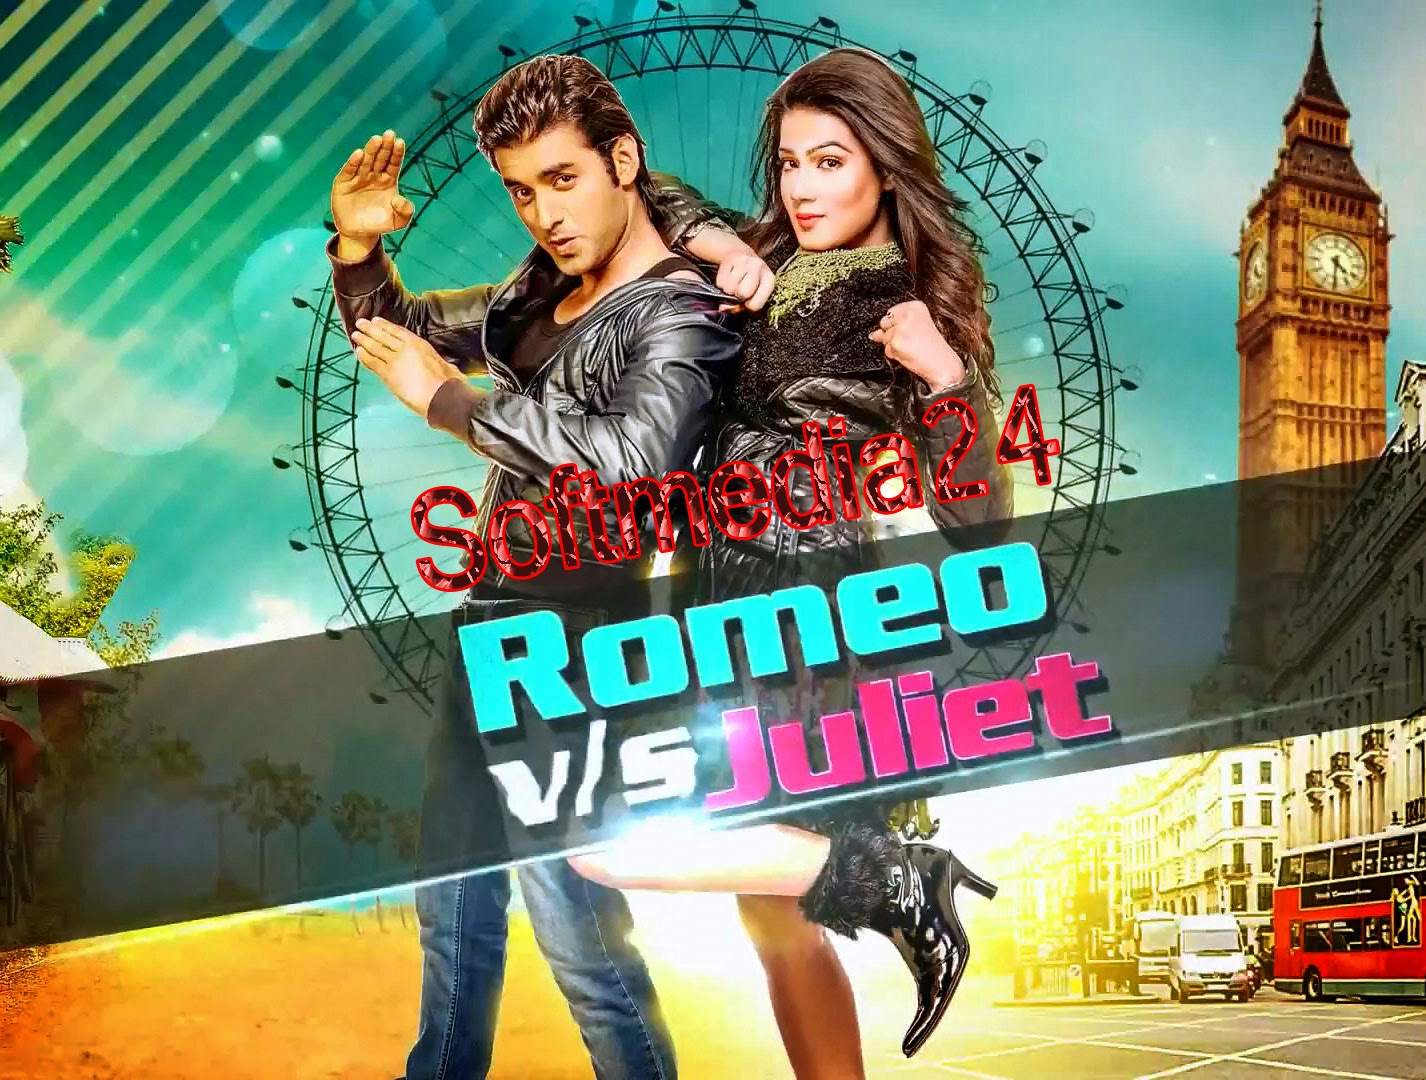 Romeo vs juliet movie download hd